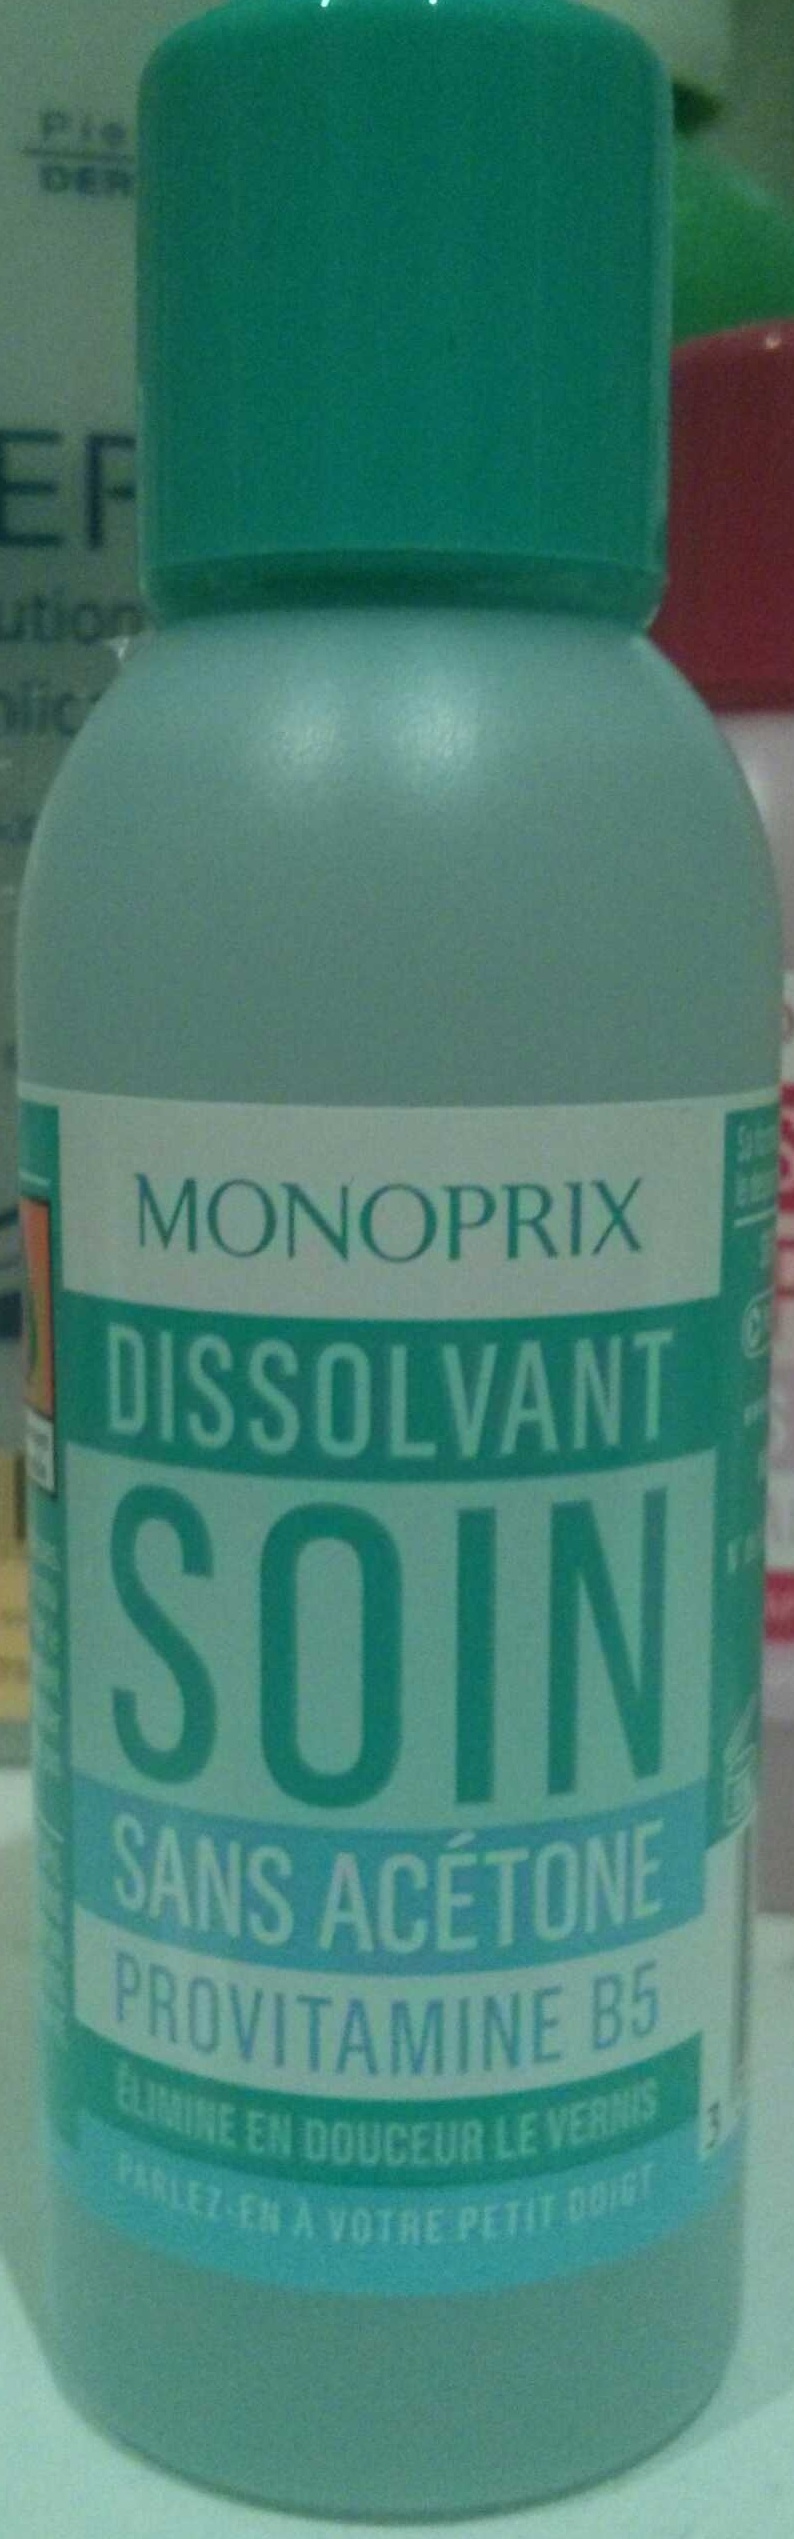 Dissolvant Soin sans acétone - Produkto - fr